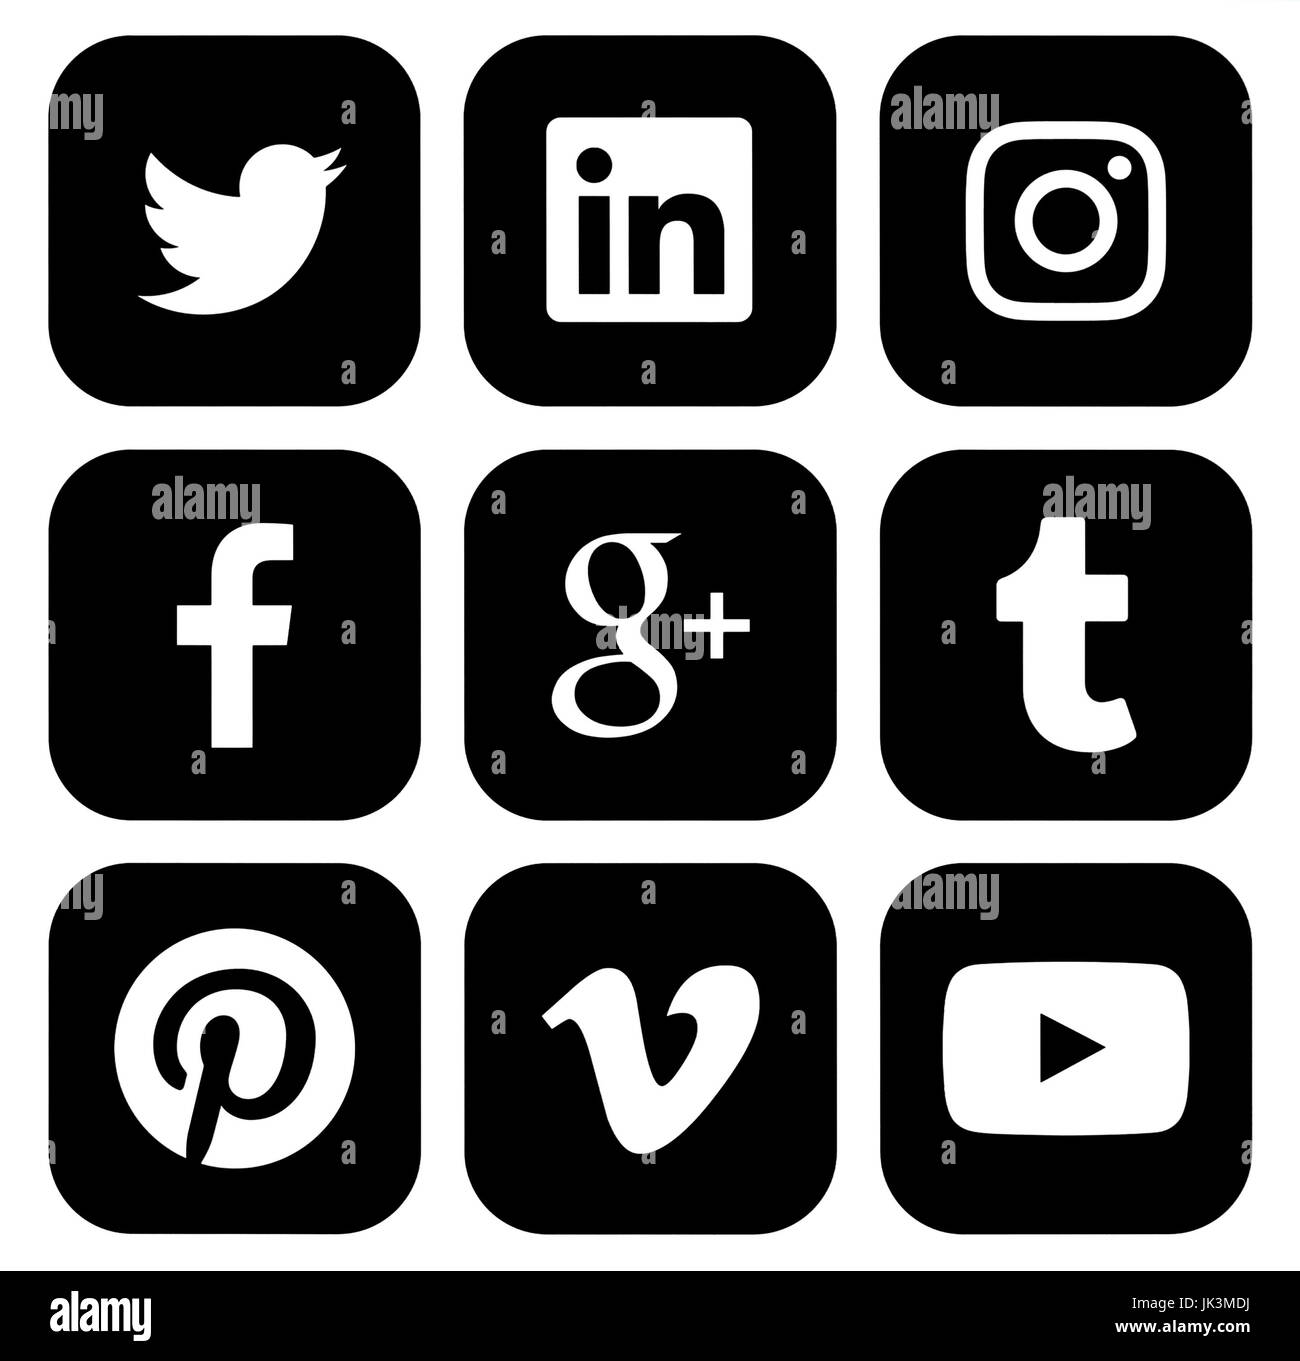 Youtube logo Black and White Stock Photos & Images - Alamy